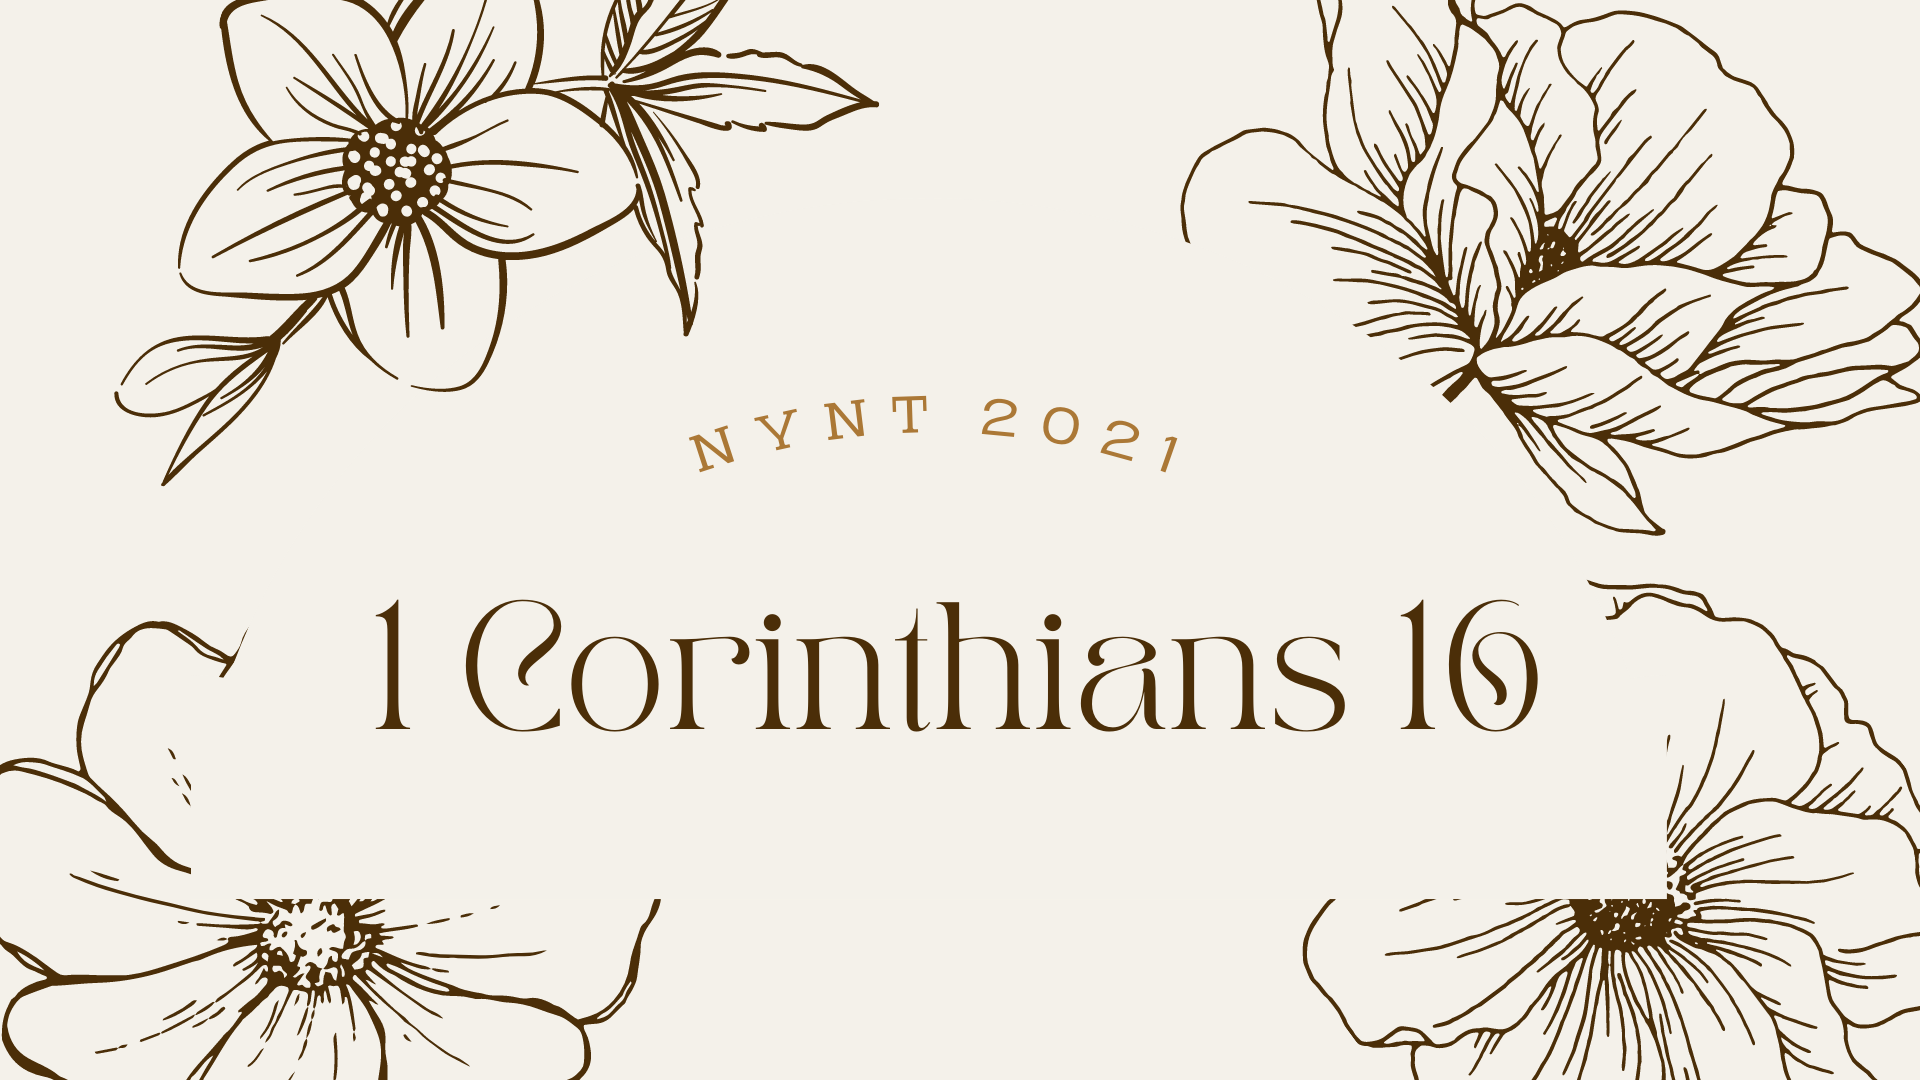 July 30: 1 Corinthians 16